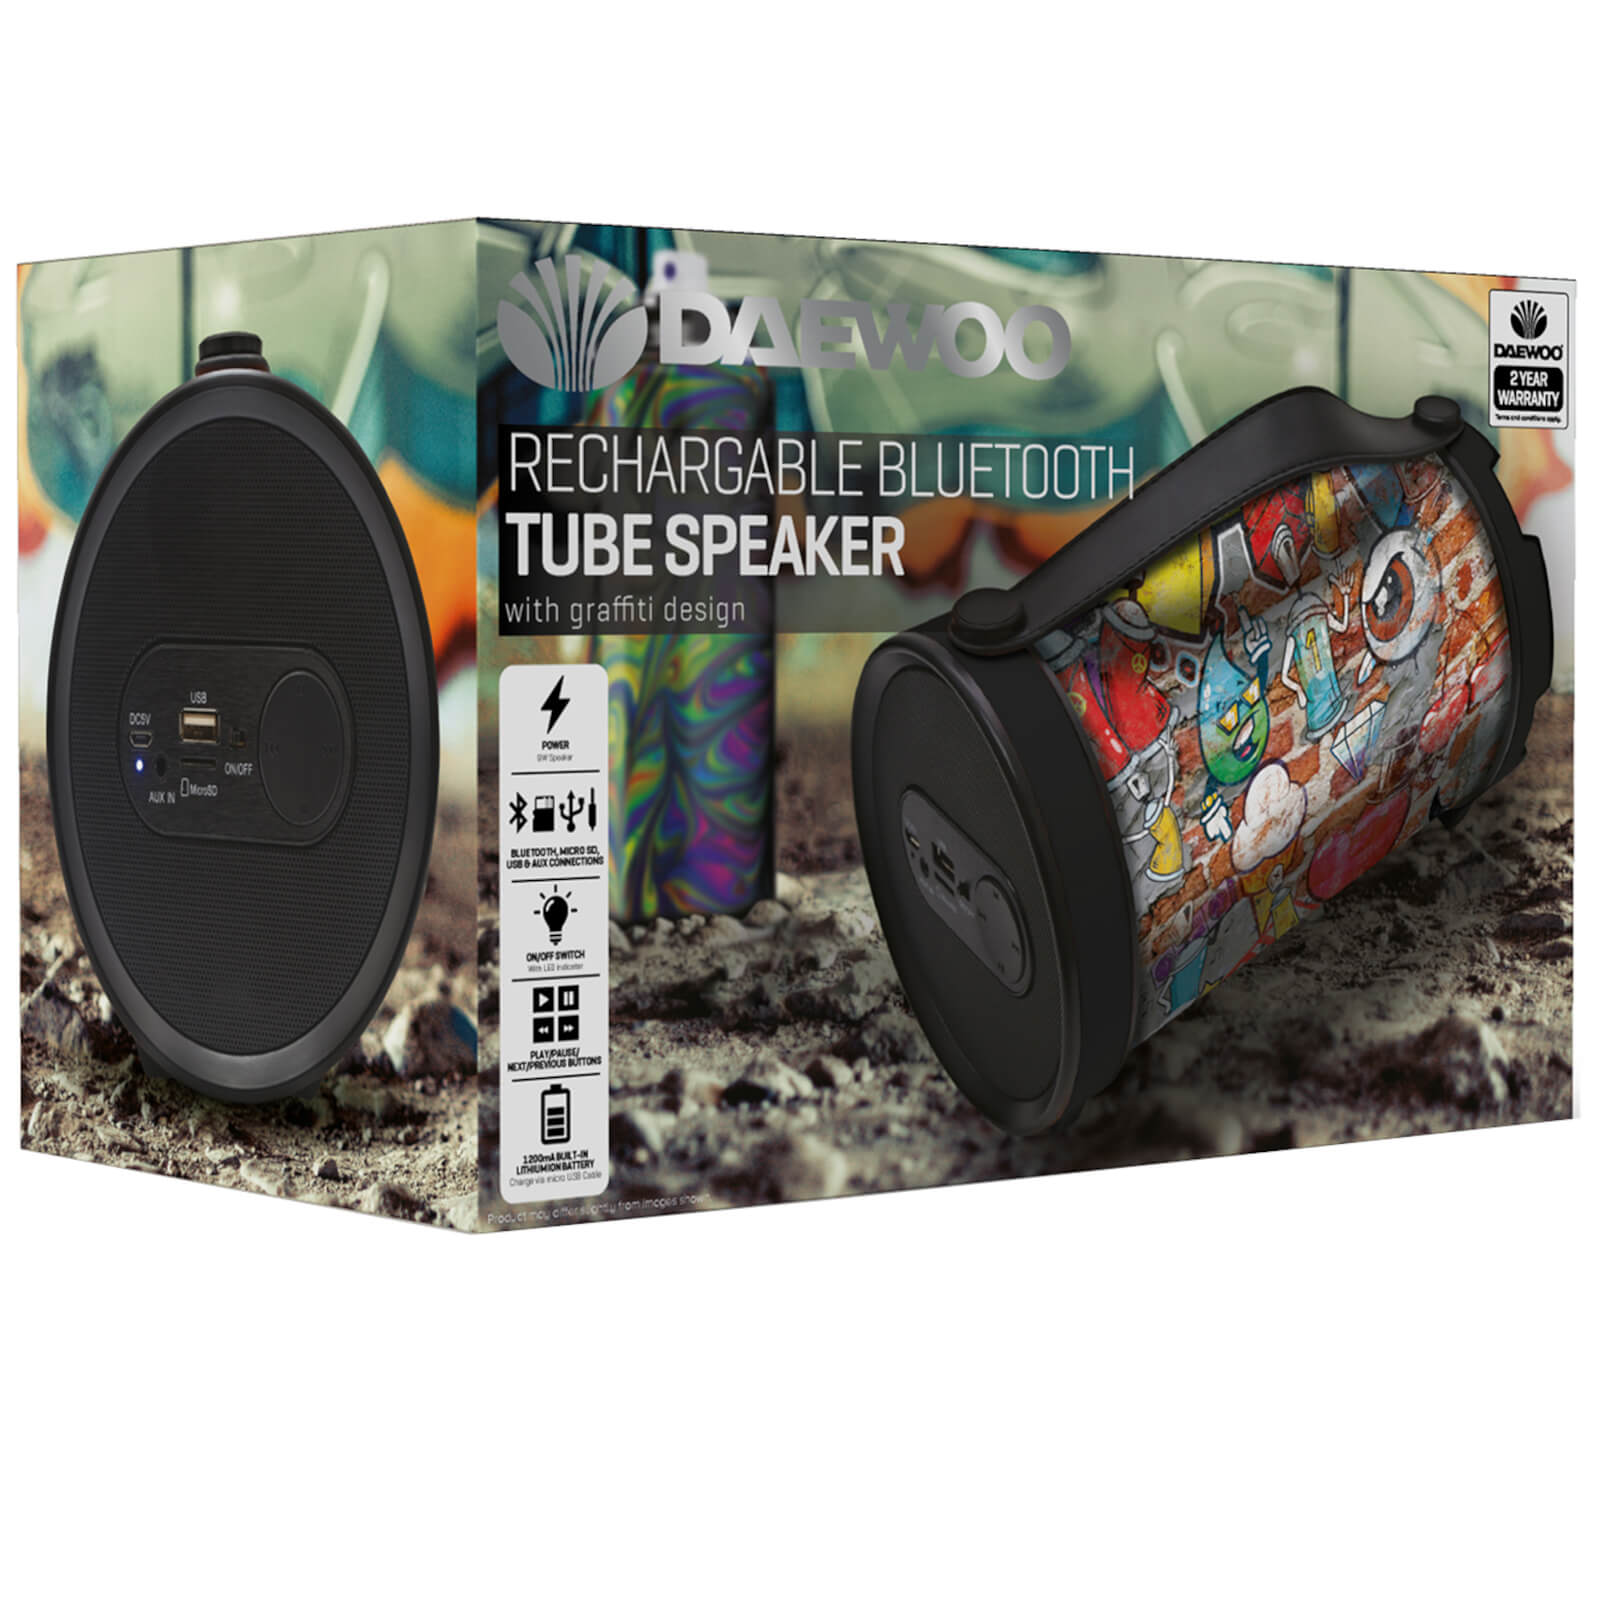 Daewoo Bluetooth Tube Speaker